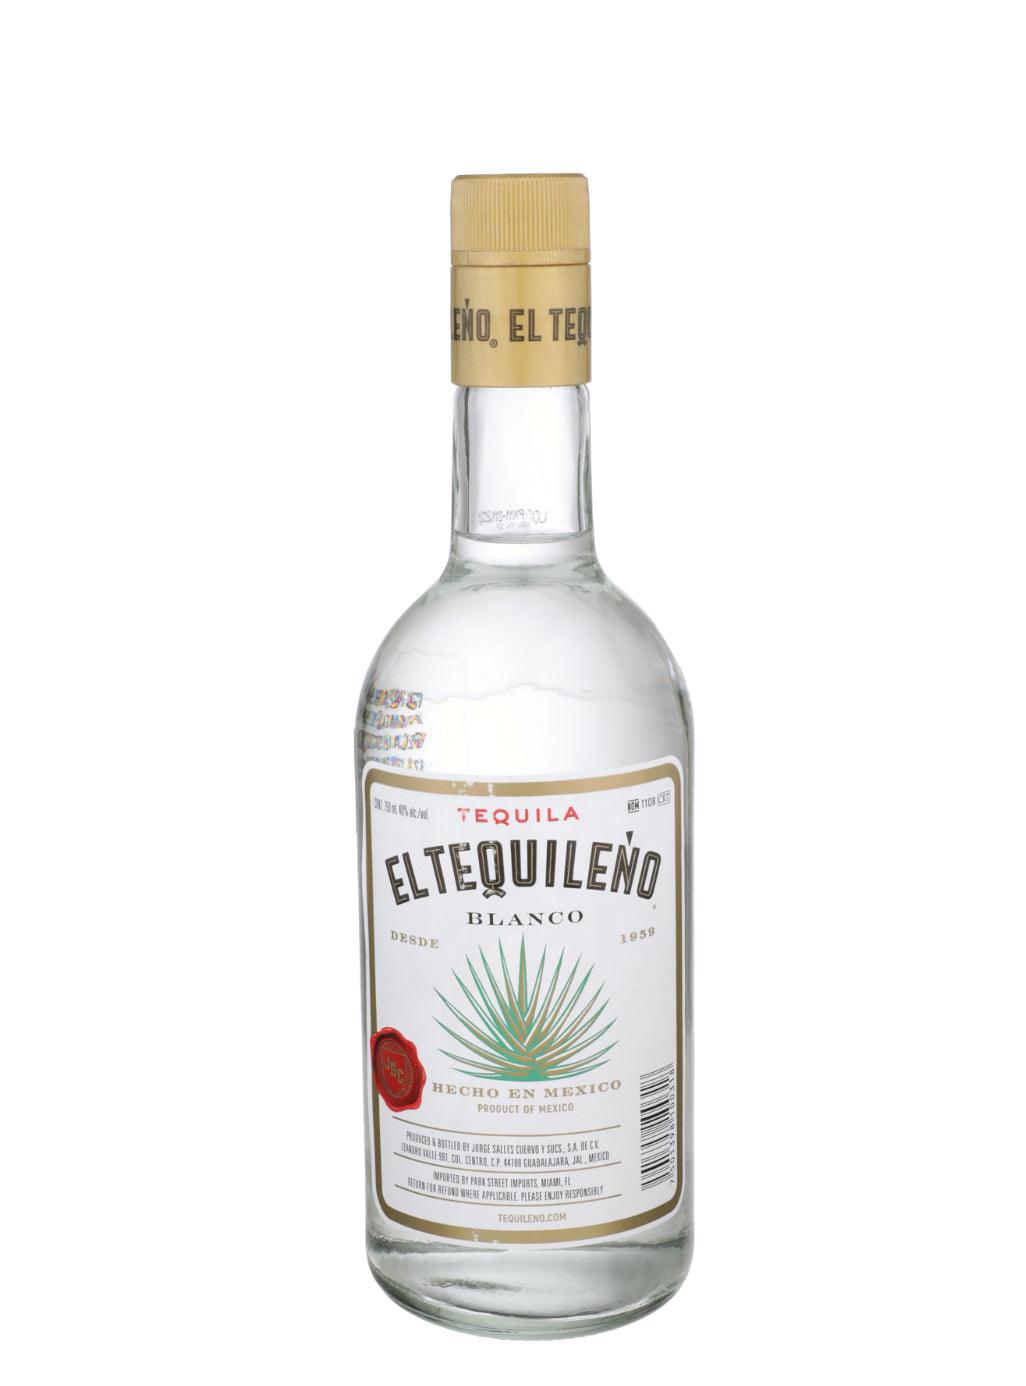 El Tequileno Blanco Tequila - Liquor Luxe